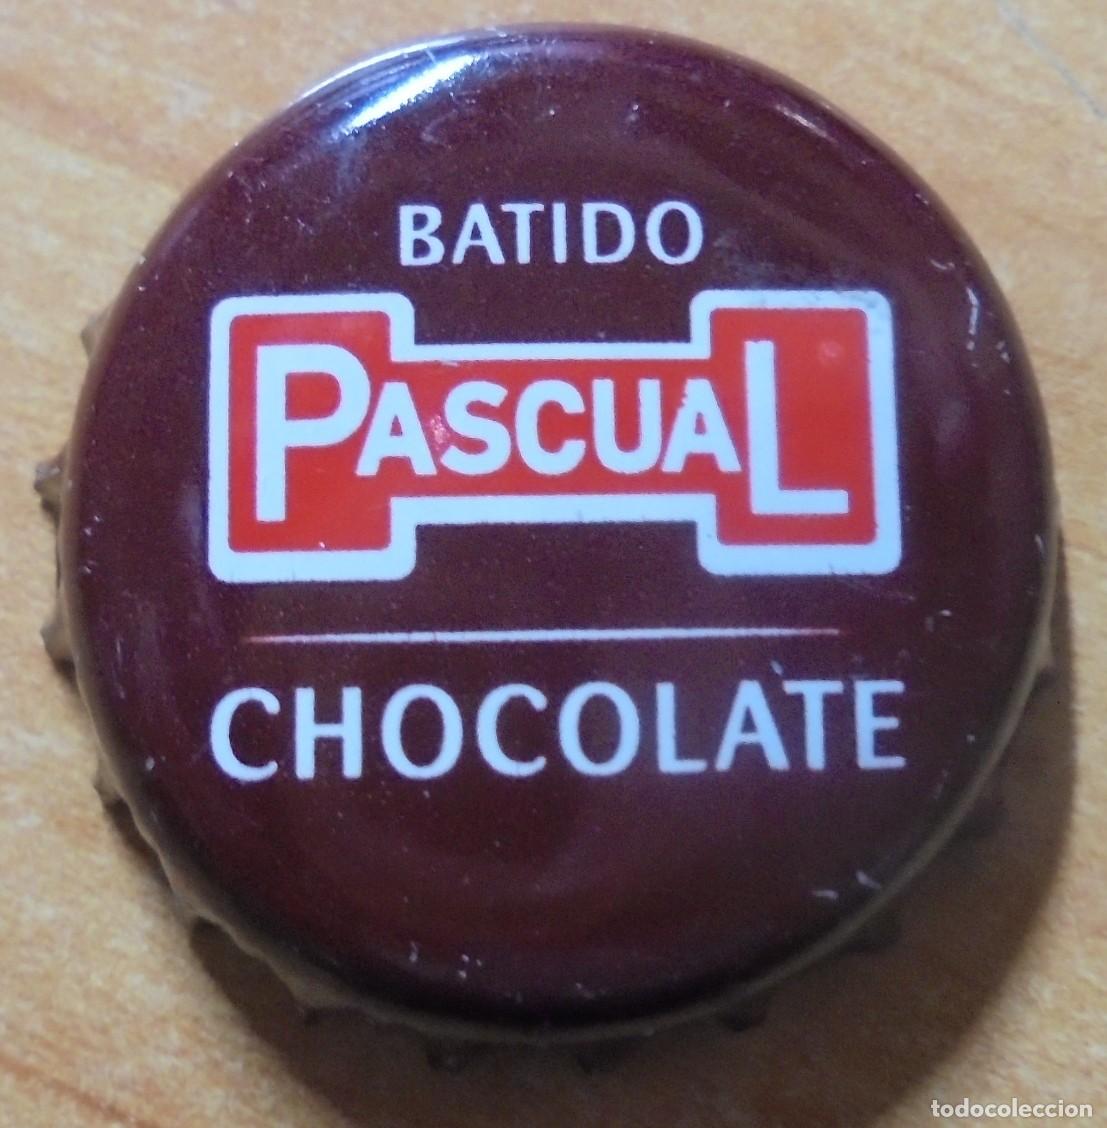 BATIDO DE CHOCOLATE-PASCUAL